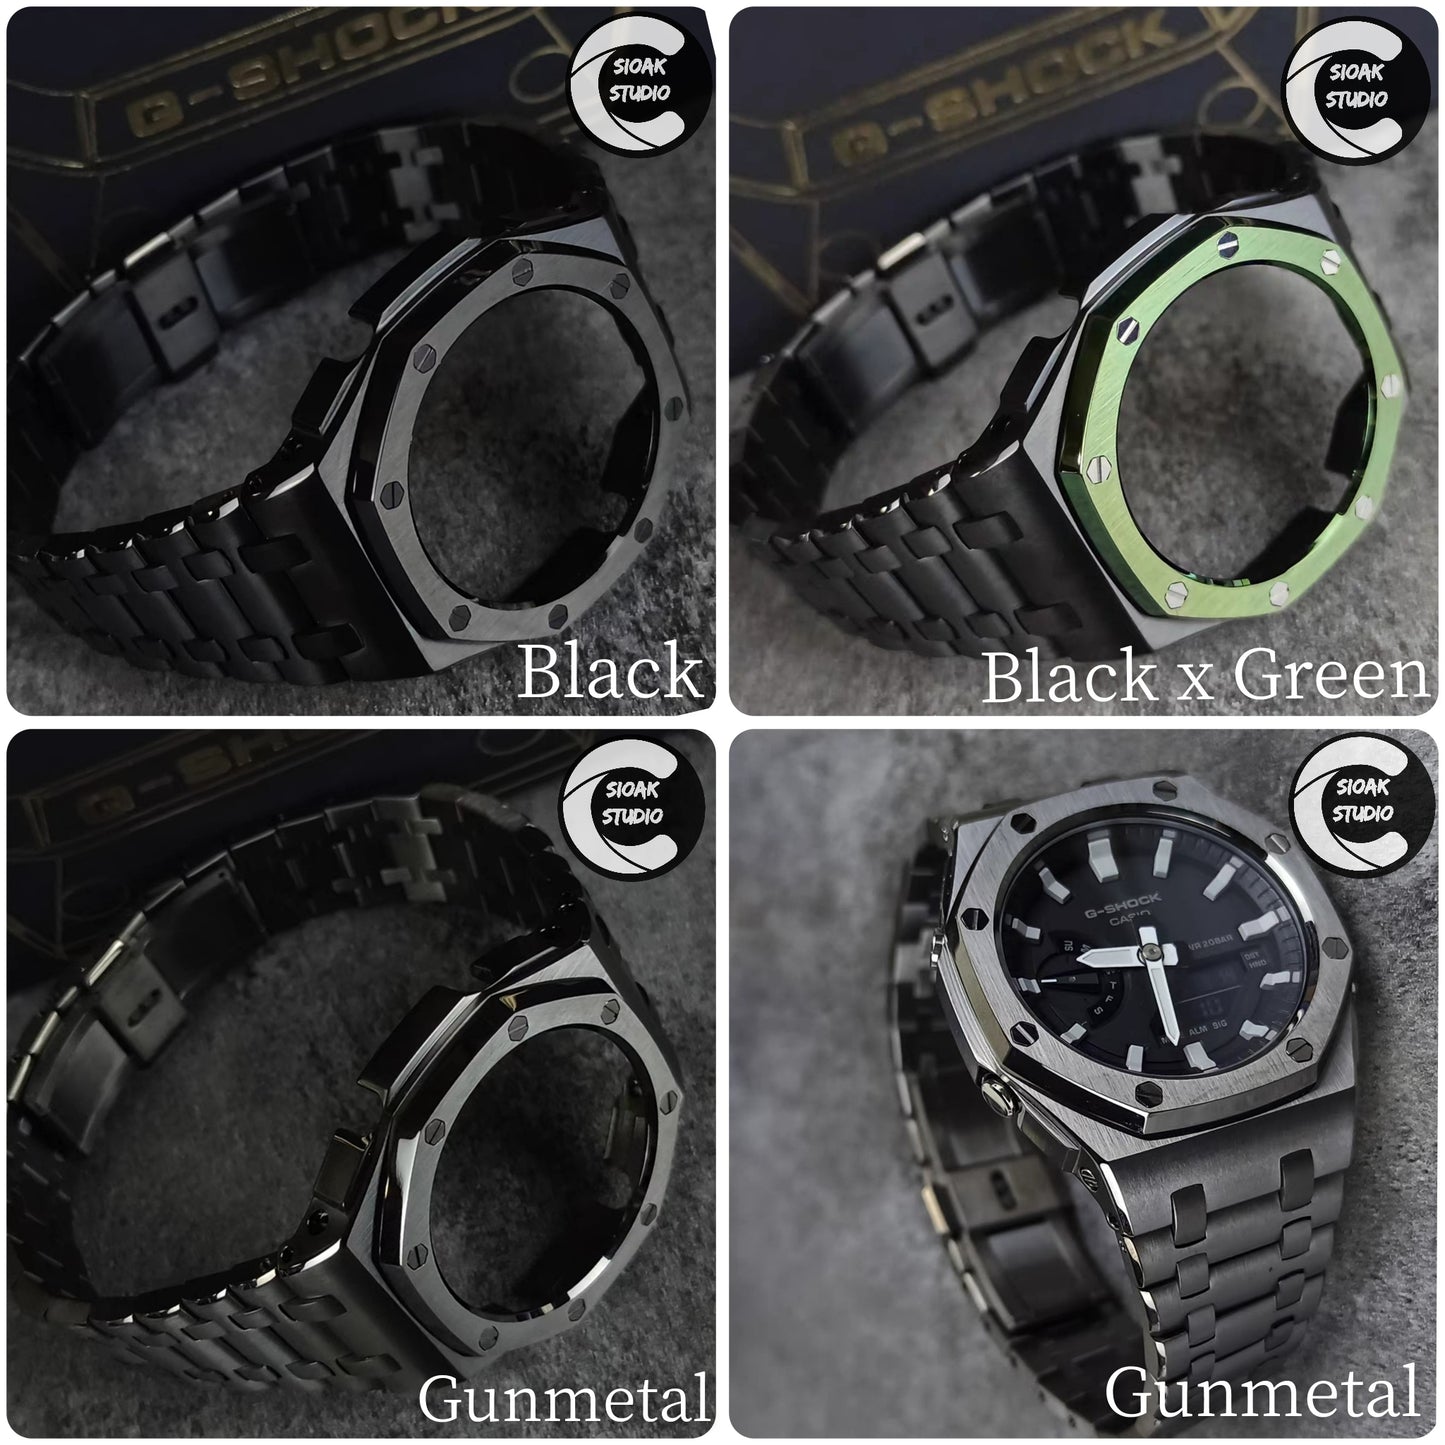 Casioak Mod Watch Offshore Superior Black Case Metal Strap Silver Time Mark Blue Dial 44mm - Casioak Studio